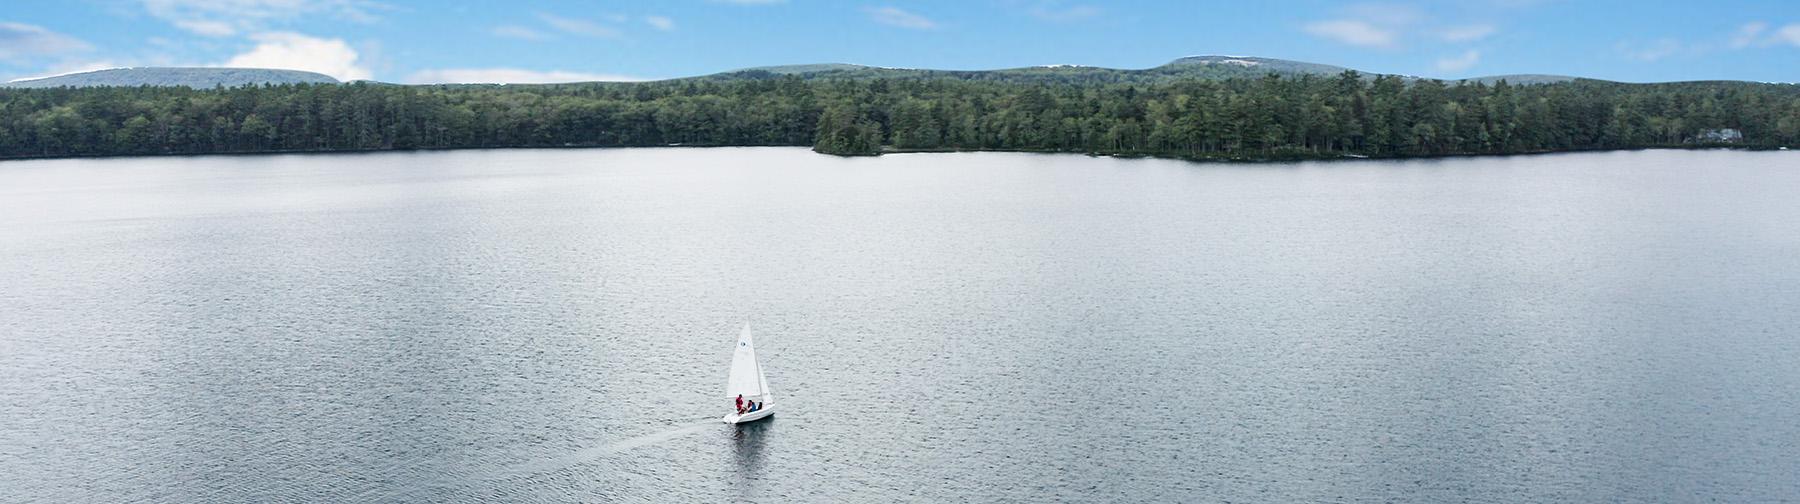 sailboat-on-medomak-lake-aerial